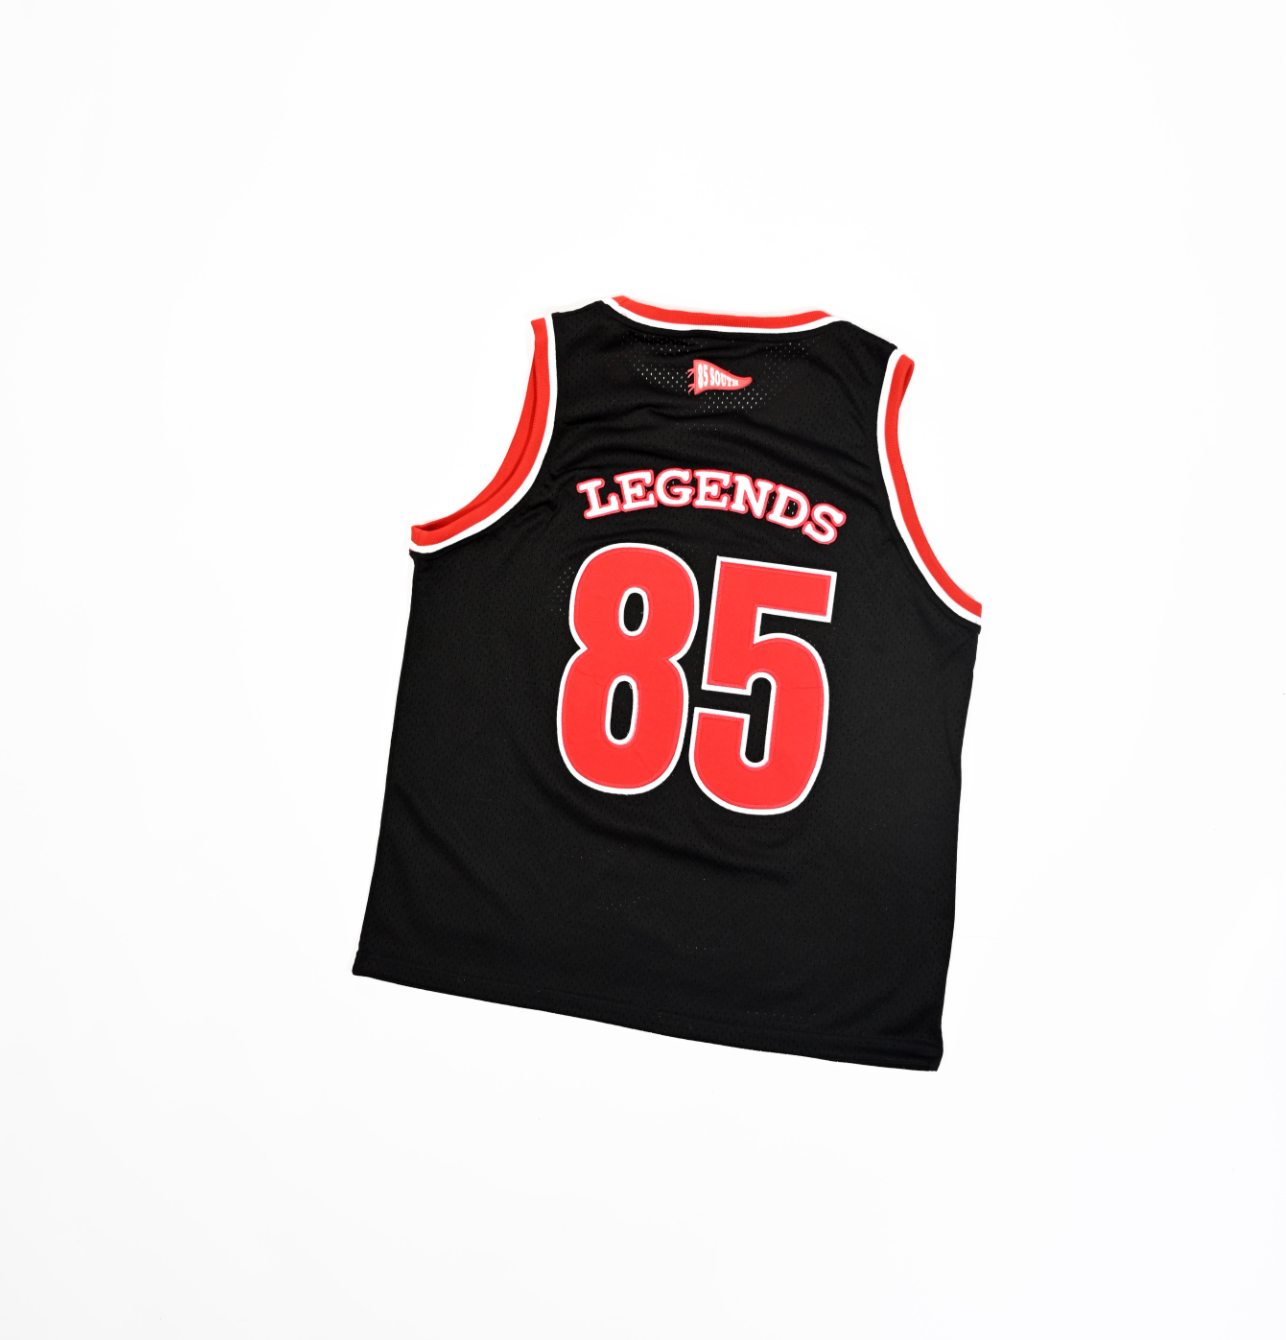 Eighty Five Apparel Company Ghetto Legend Allstar Basketball Jersey (White) 3XL